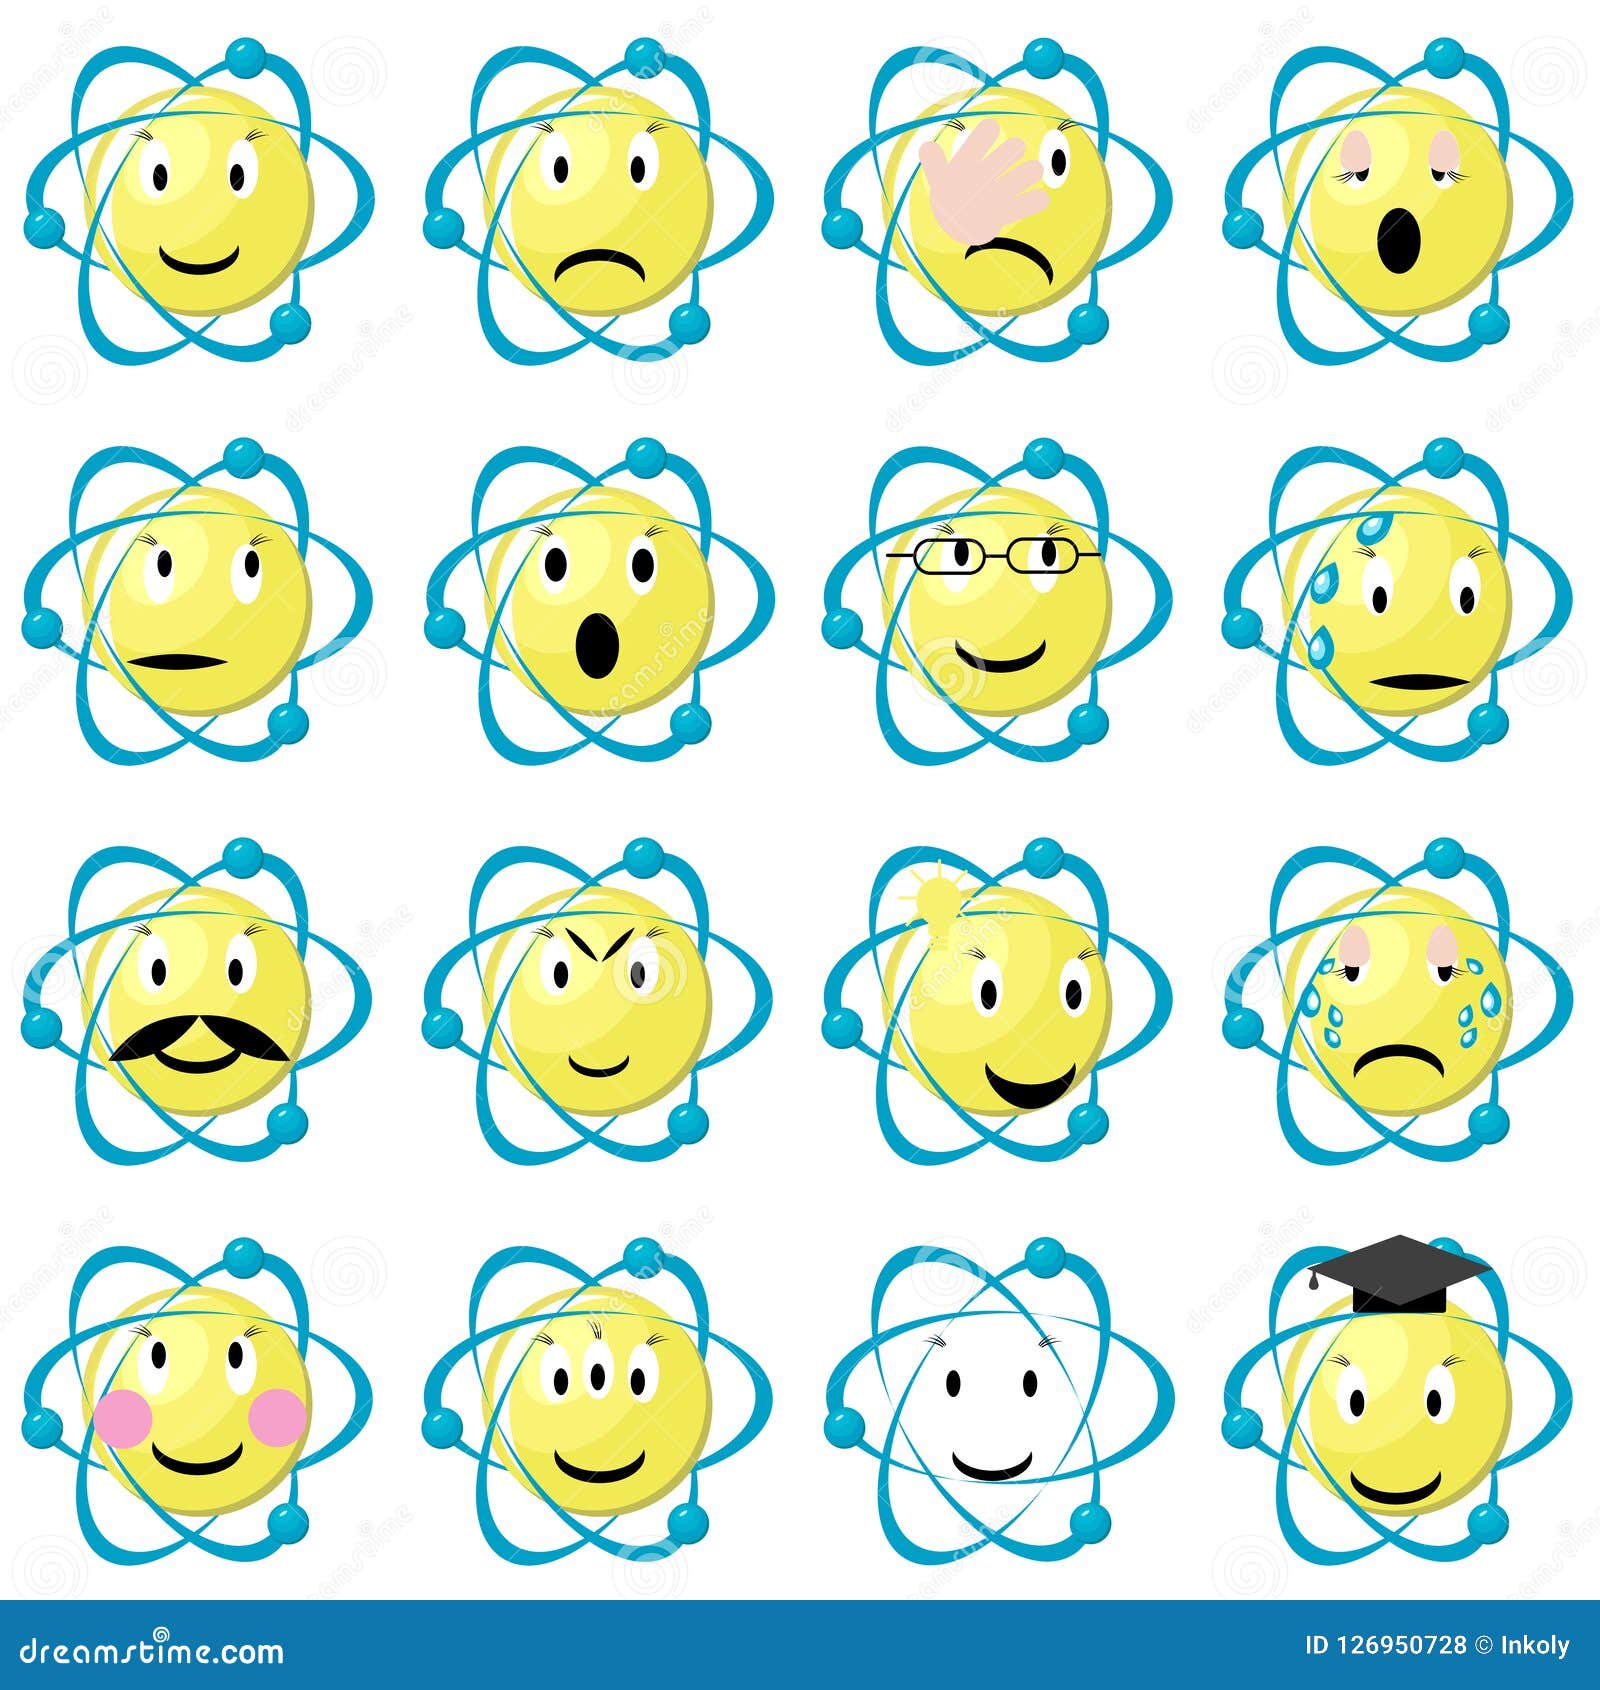 Atom emoticons icons set stock vector Illustration of 